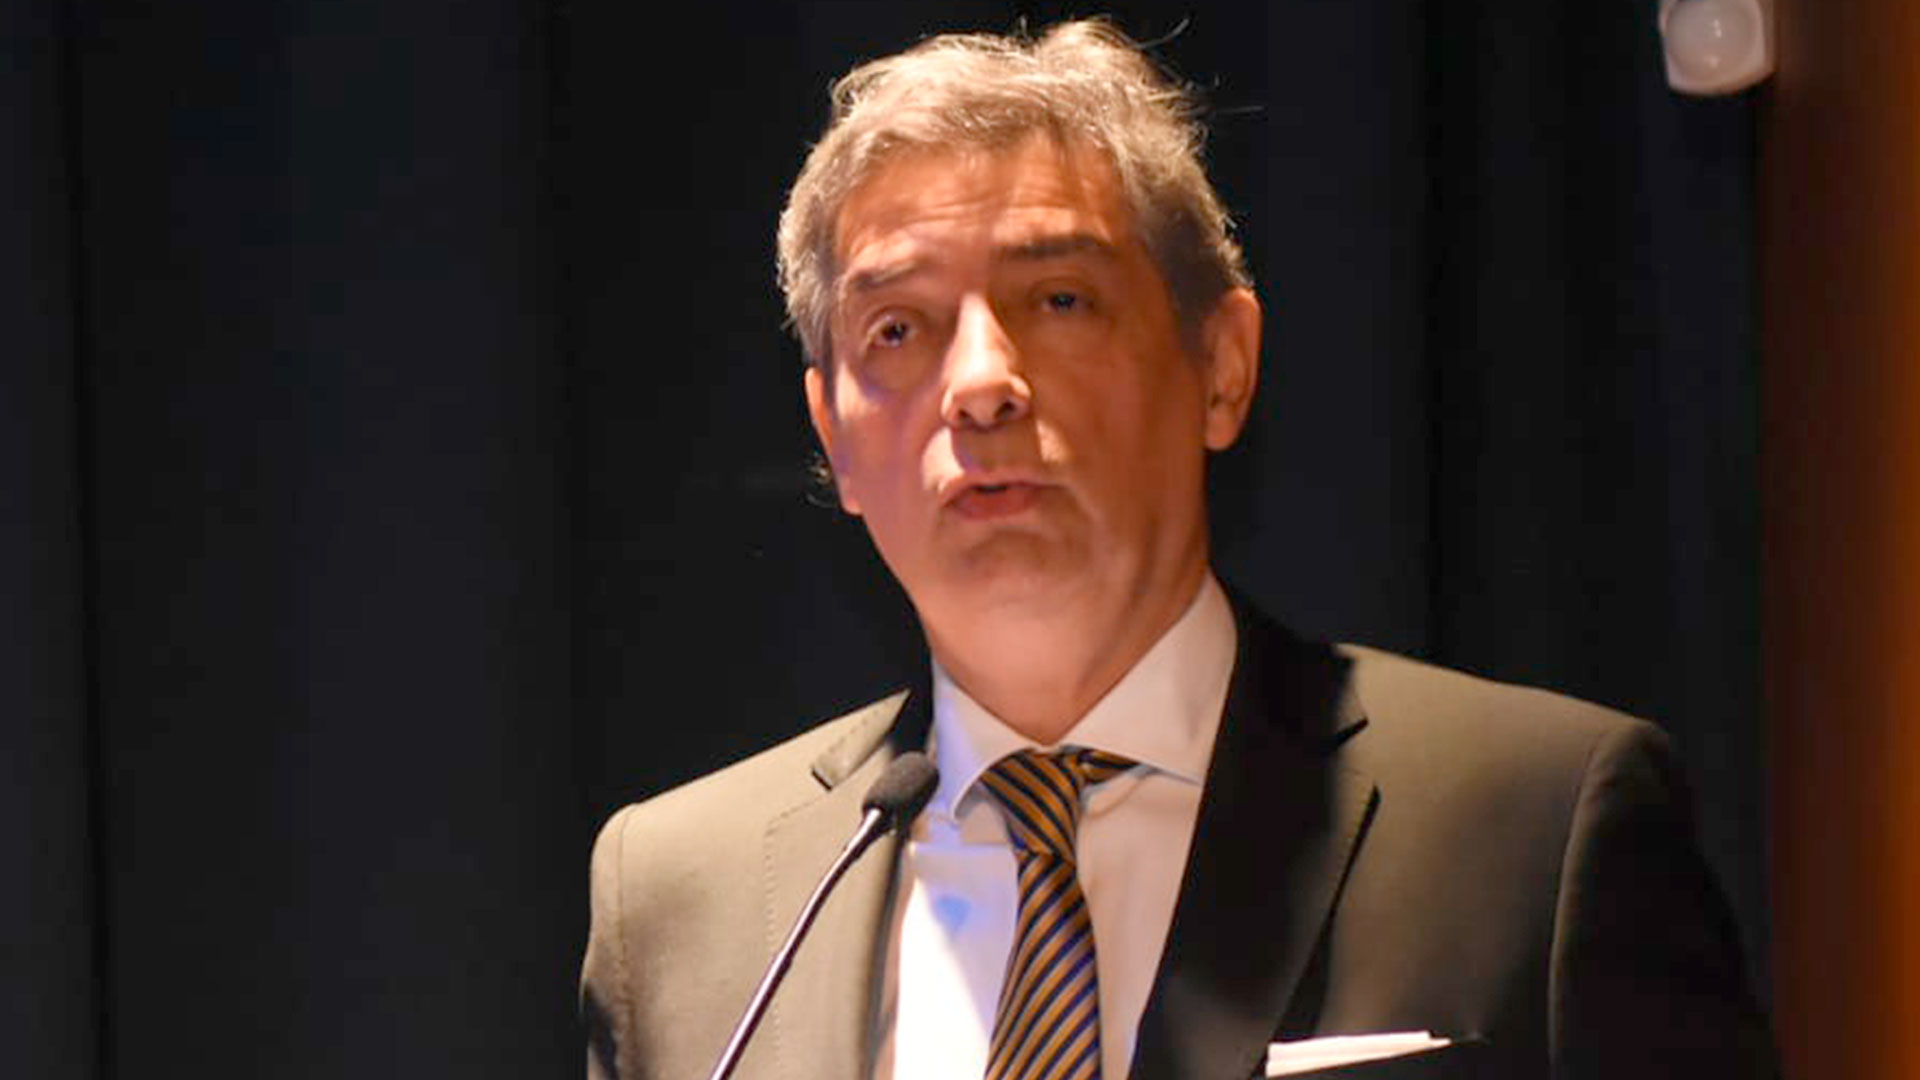 Horacio Rosatti, nuevo presidente del Consejo de la Magistratura
(Quique Galletto)